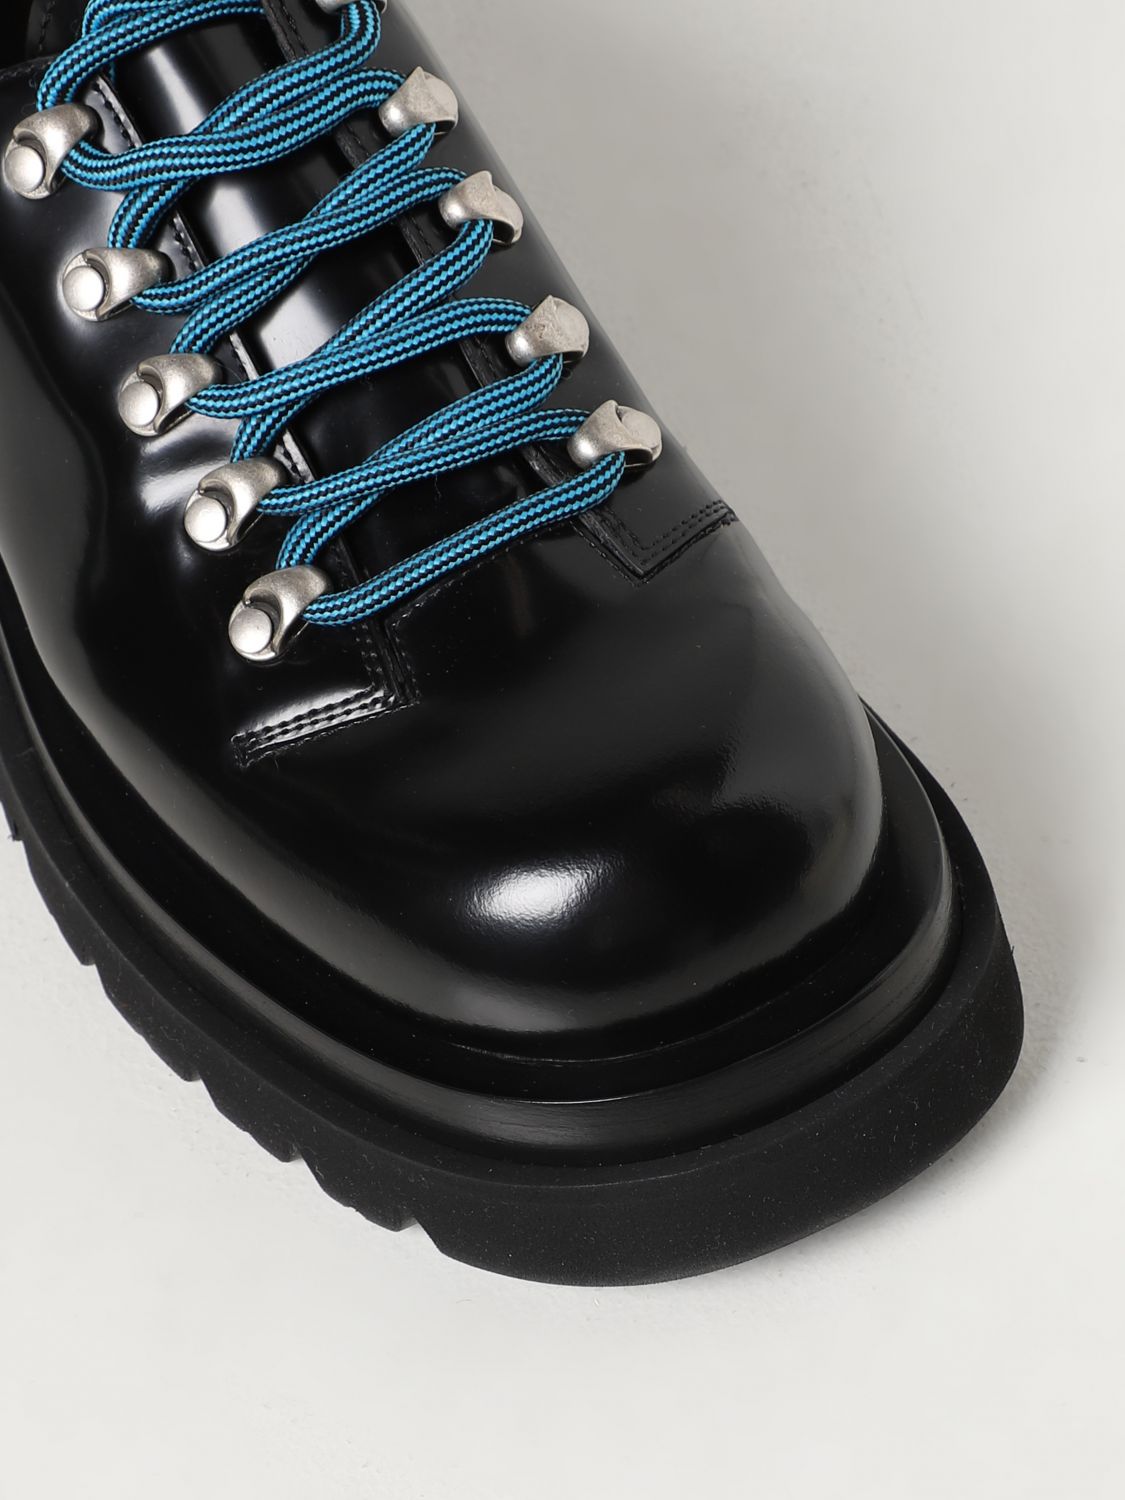 BOTTEGA VENETA: brogue shoes for man - Black  Bottega Veneta brogue shoes  763737V2WX0 online at